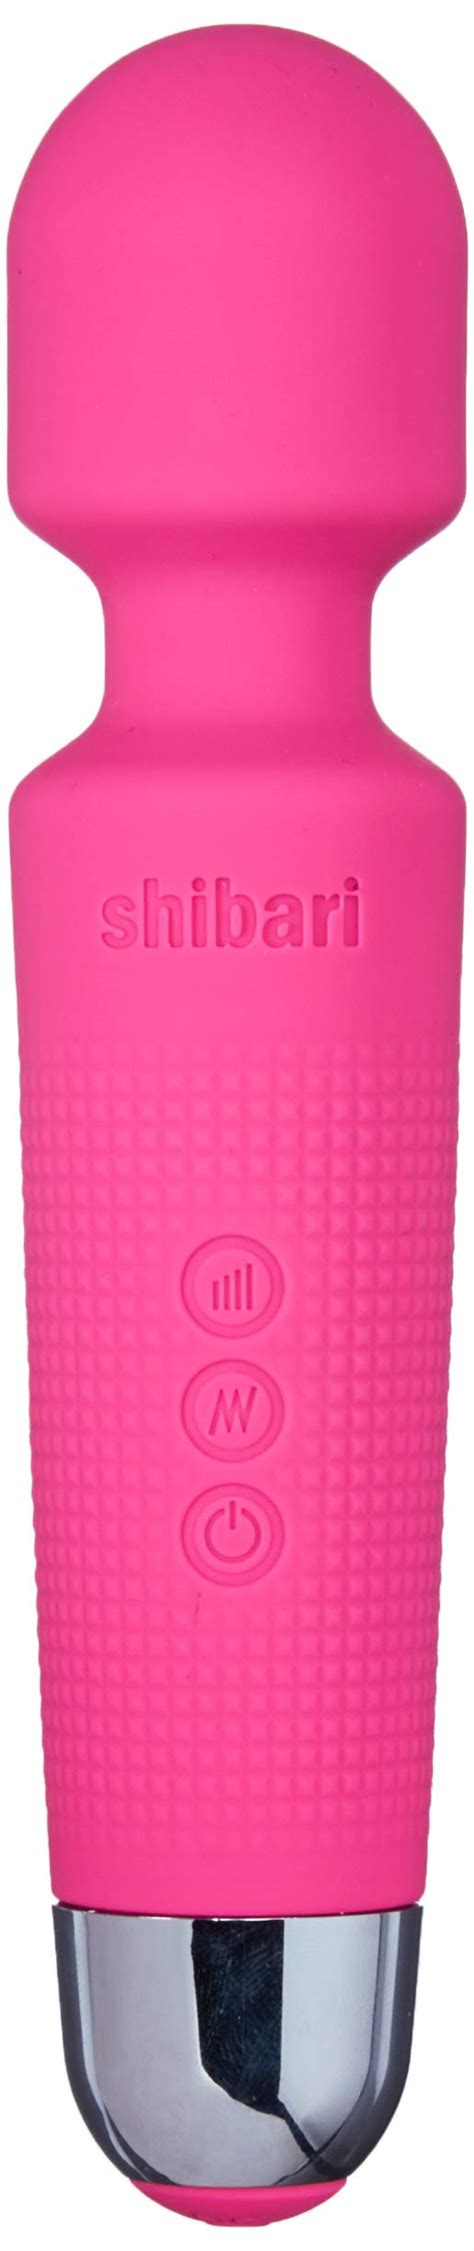 buy shibari mini halo vibrator adult sex toy massage wand vibrator clitoral stimulator